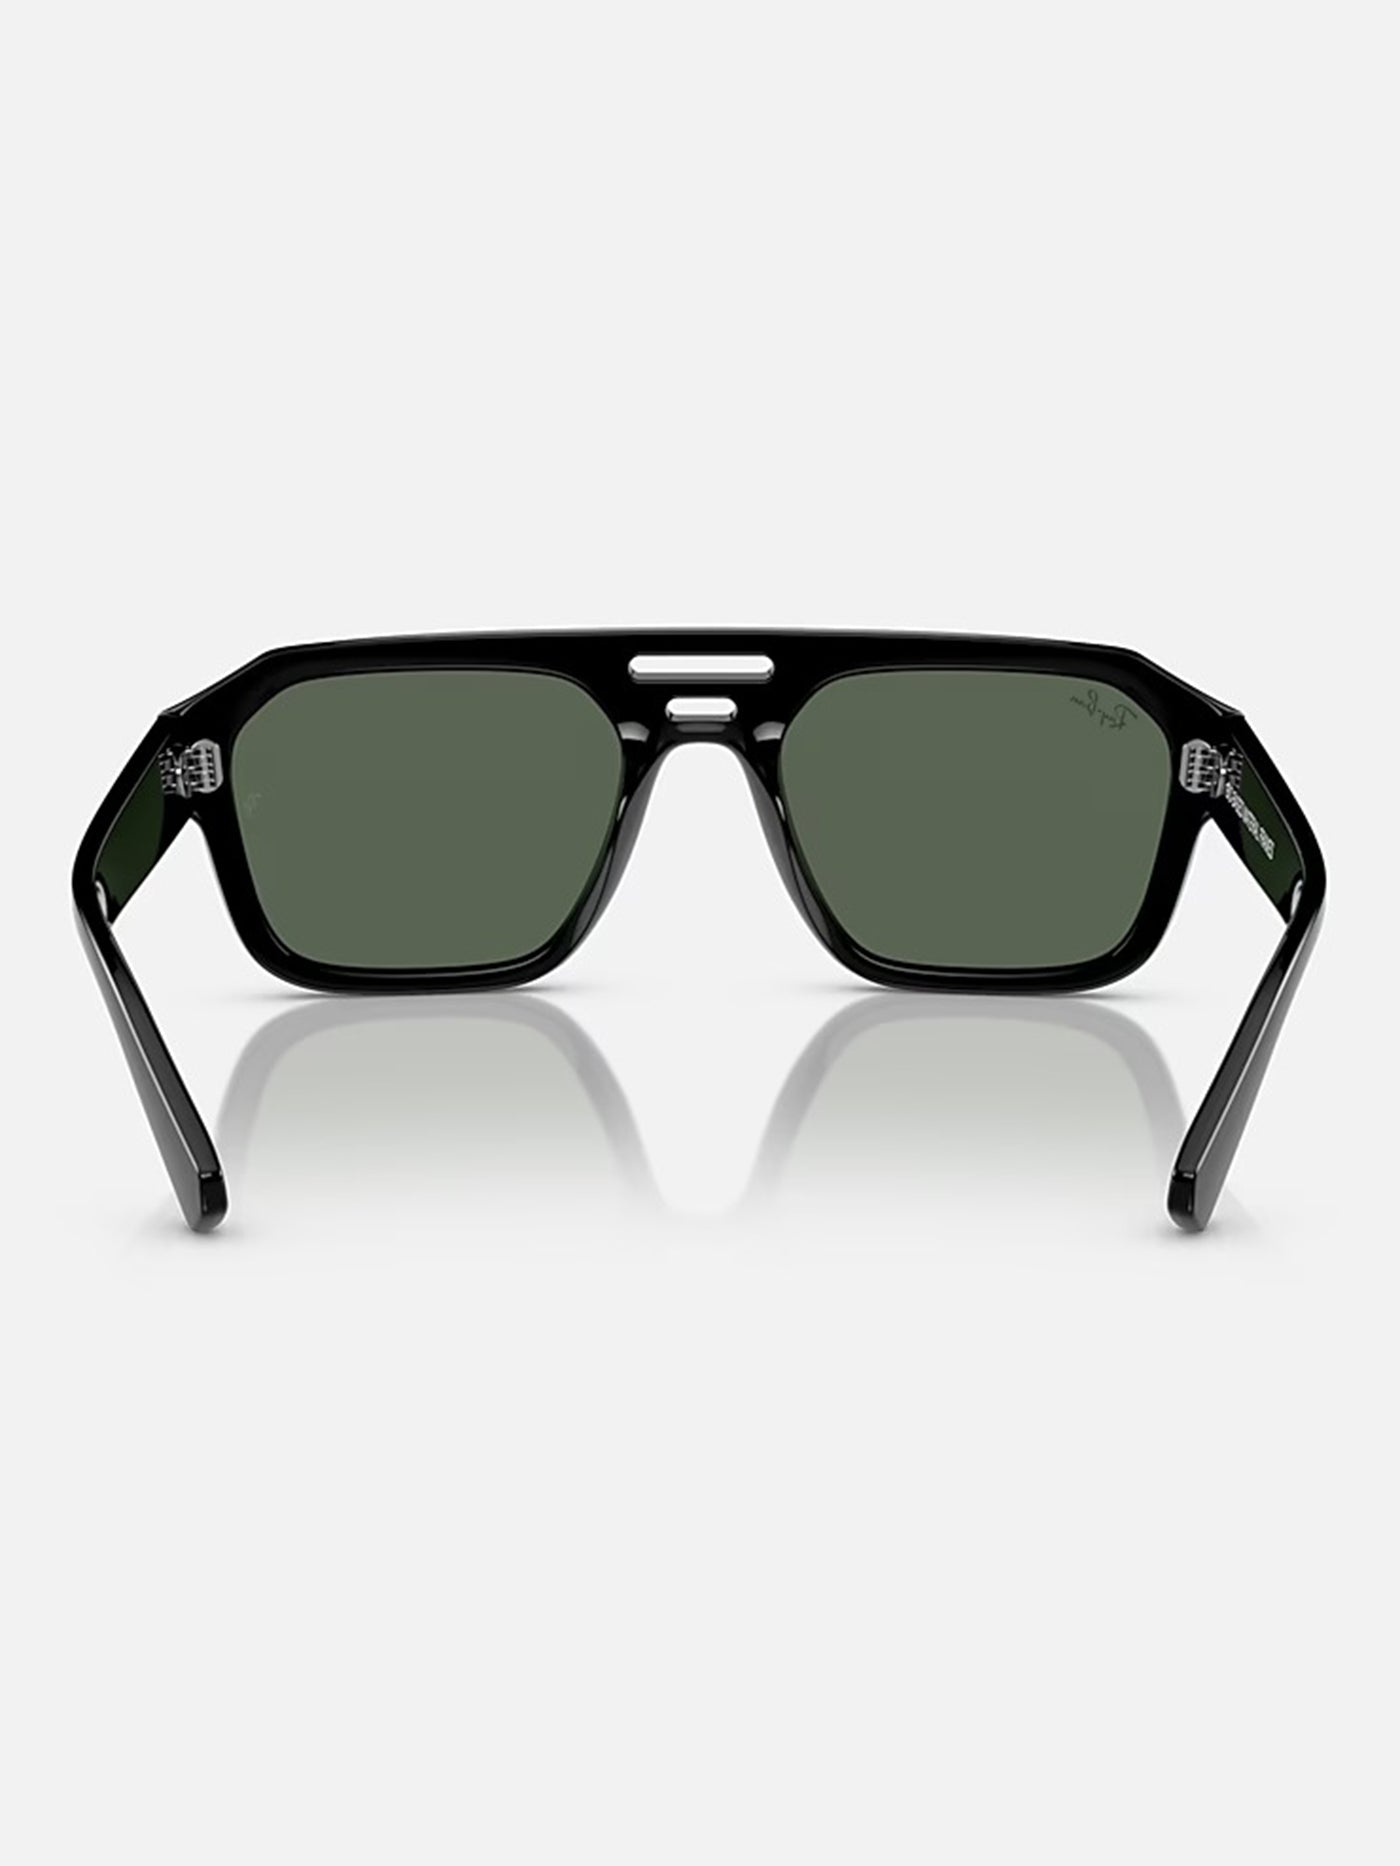 Ray-Ban Corrigan Black/Dark Green Sunglasses